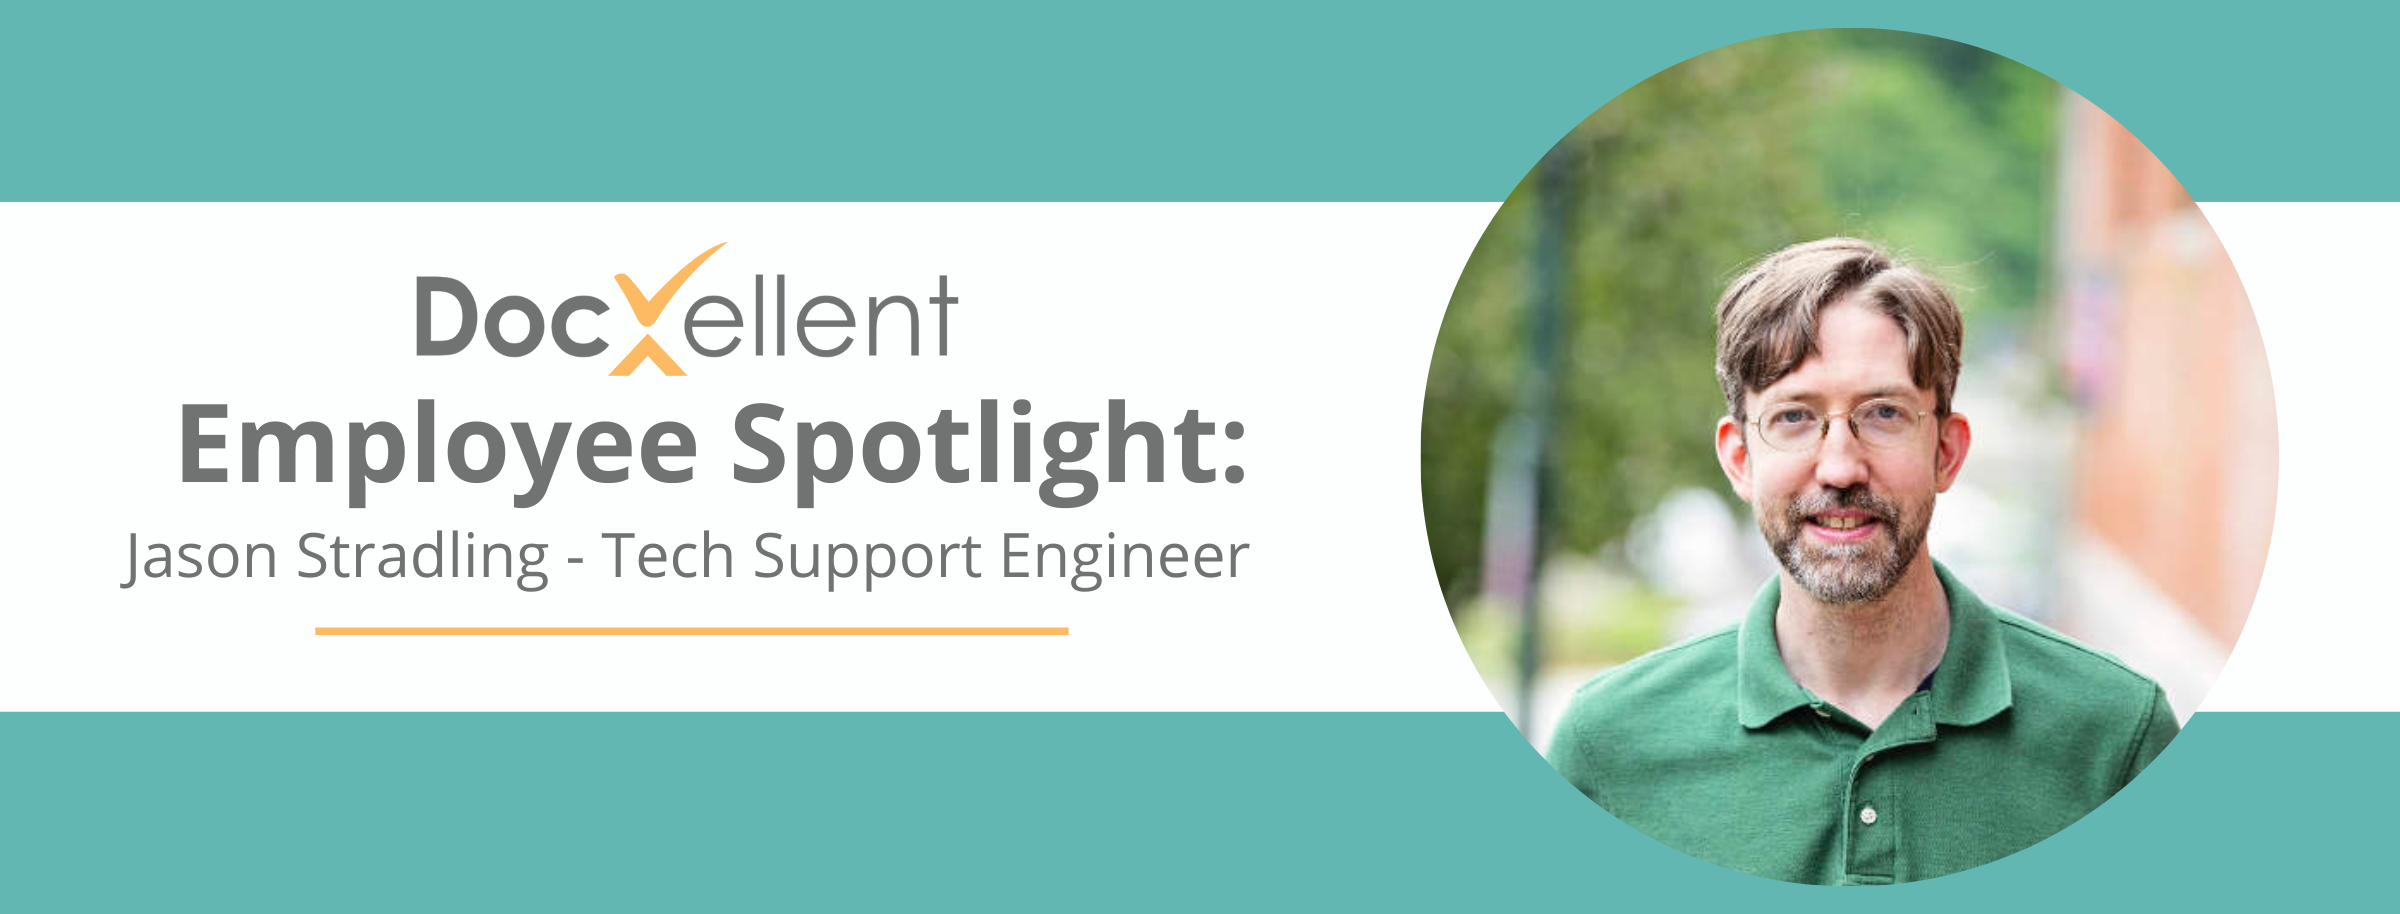 Employee Spotlight: Jason Stradling - Tech Support Engineer